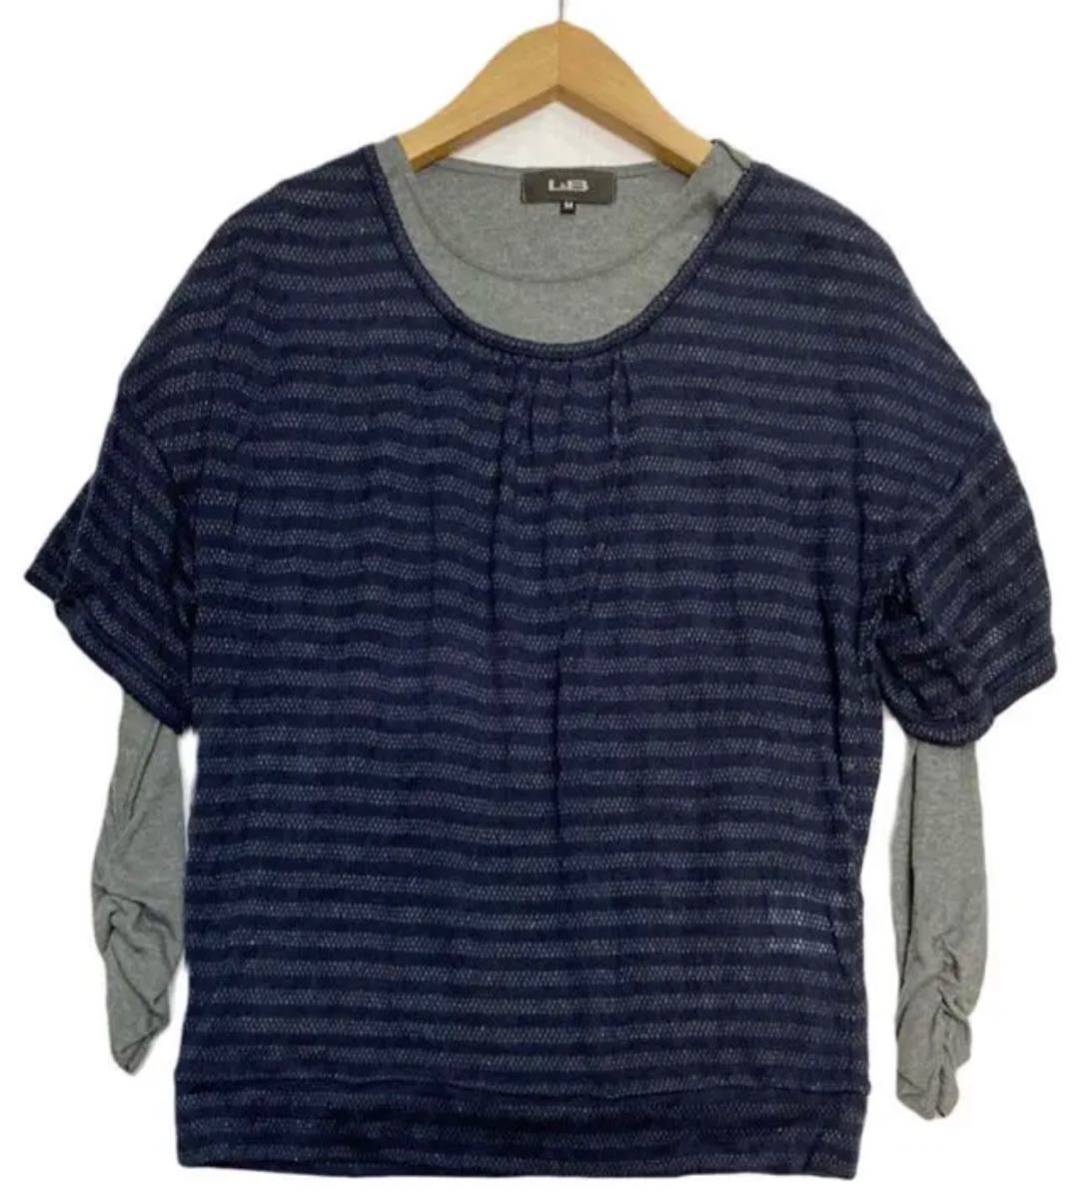 L&B*(M) sleeve shaggy long sleeve tops & border knitted ensemble / beautiful goods 